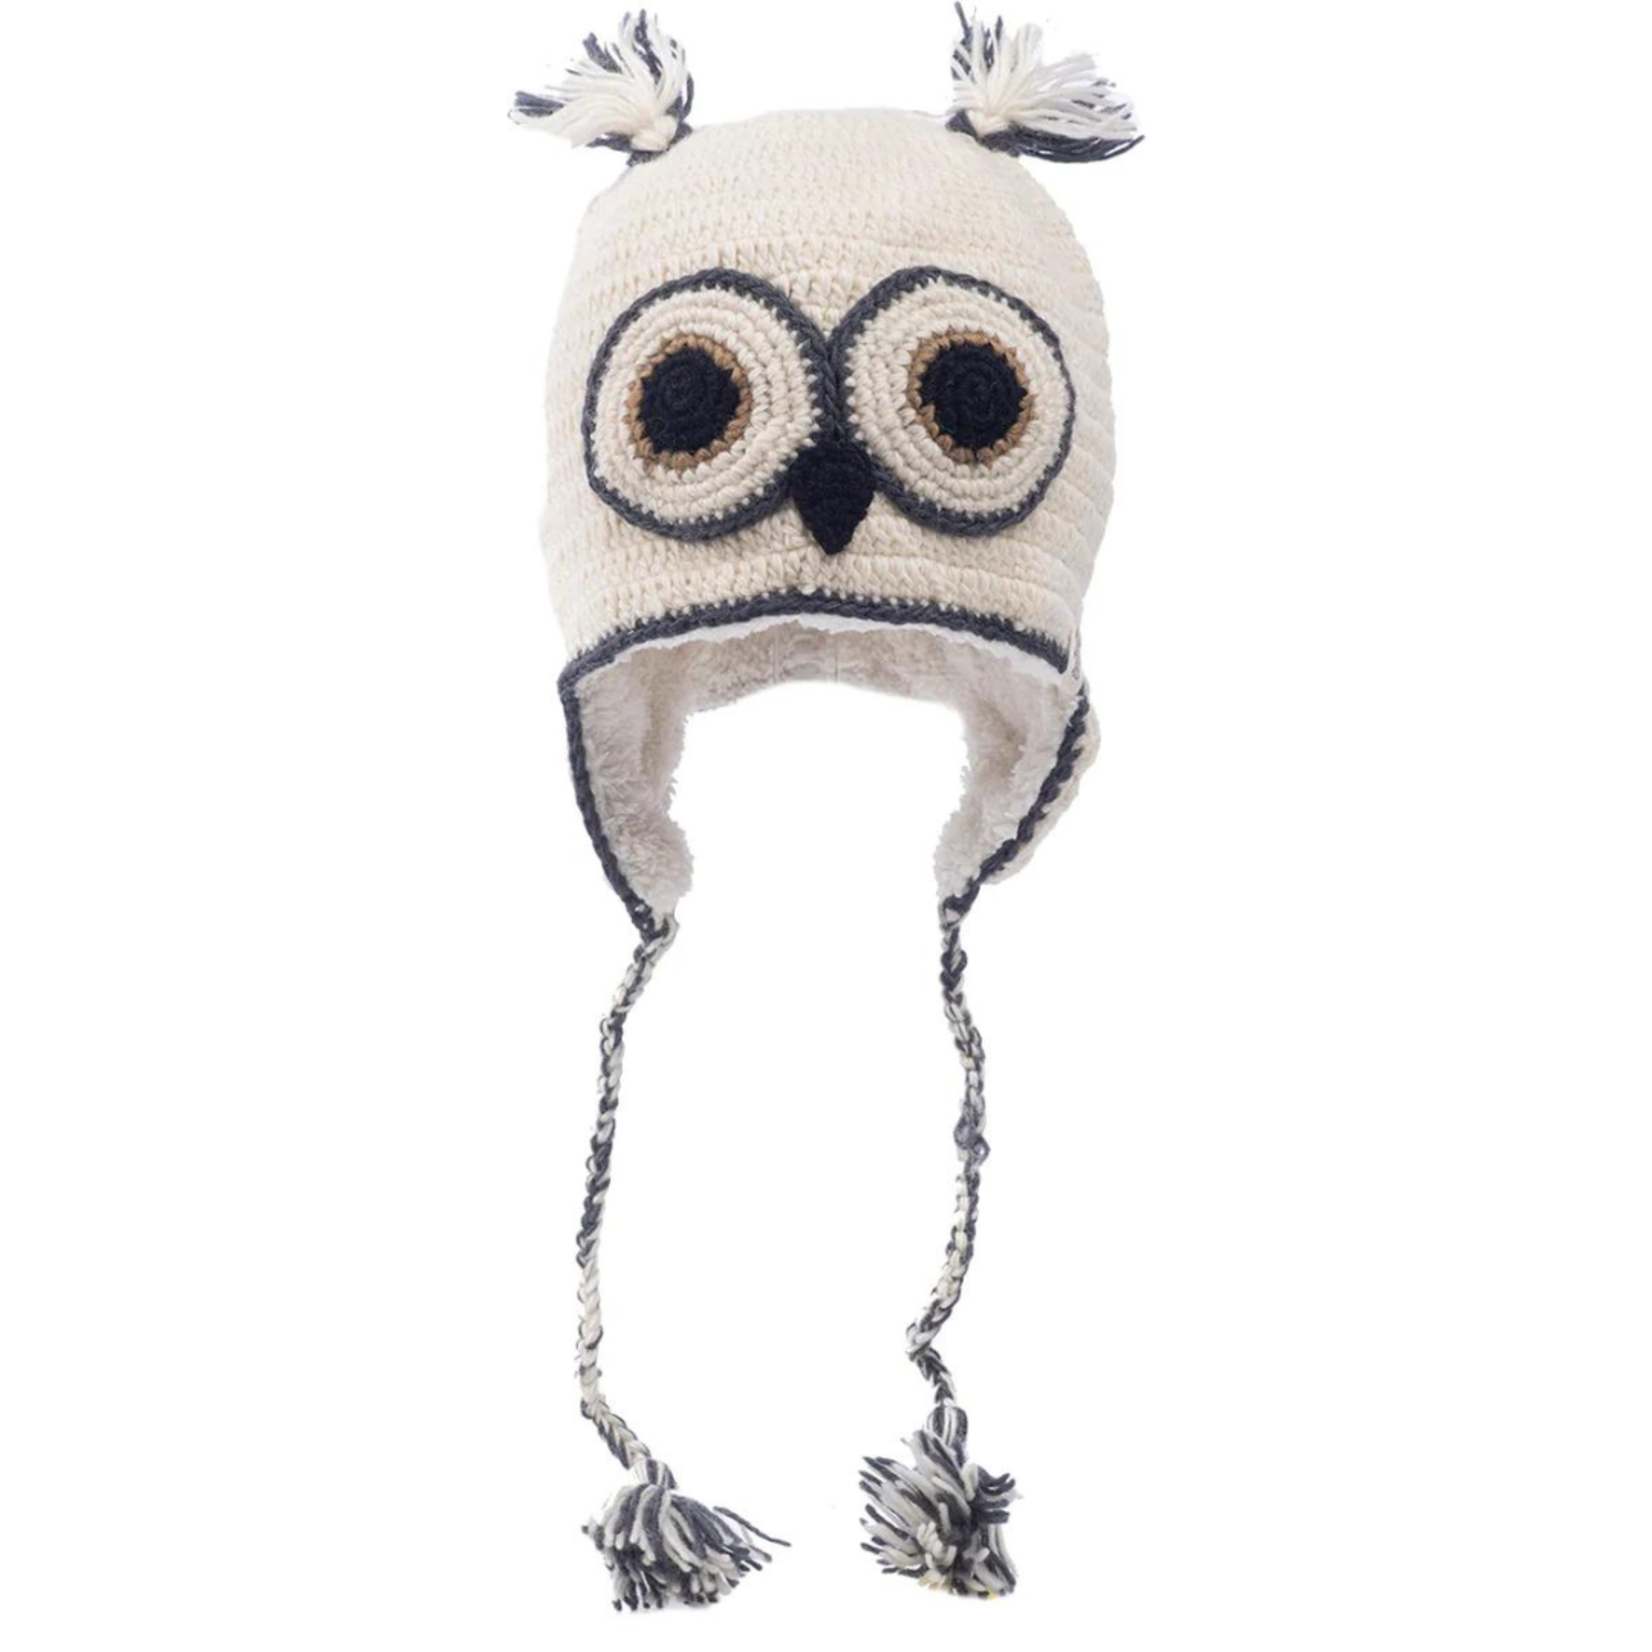 Nirvanna Designs Crochet Owl Hat